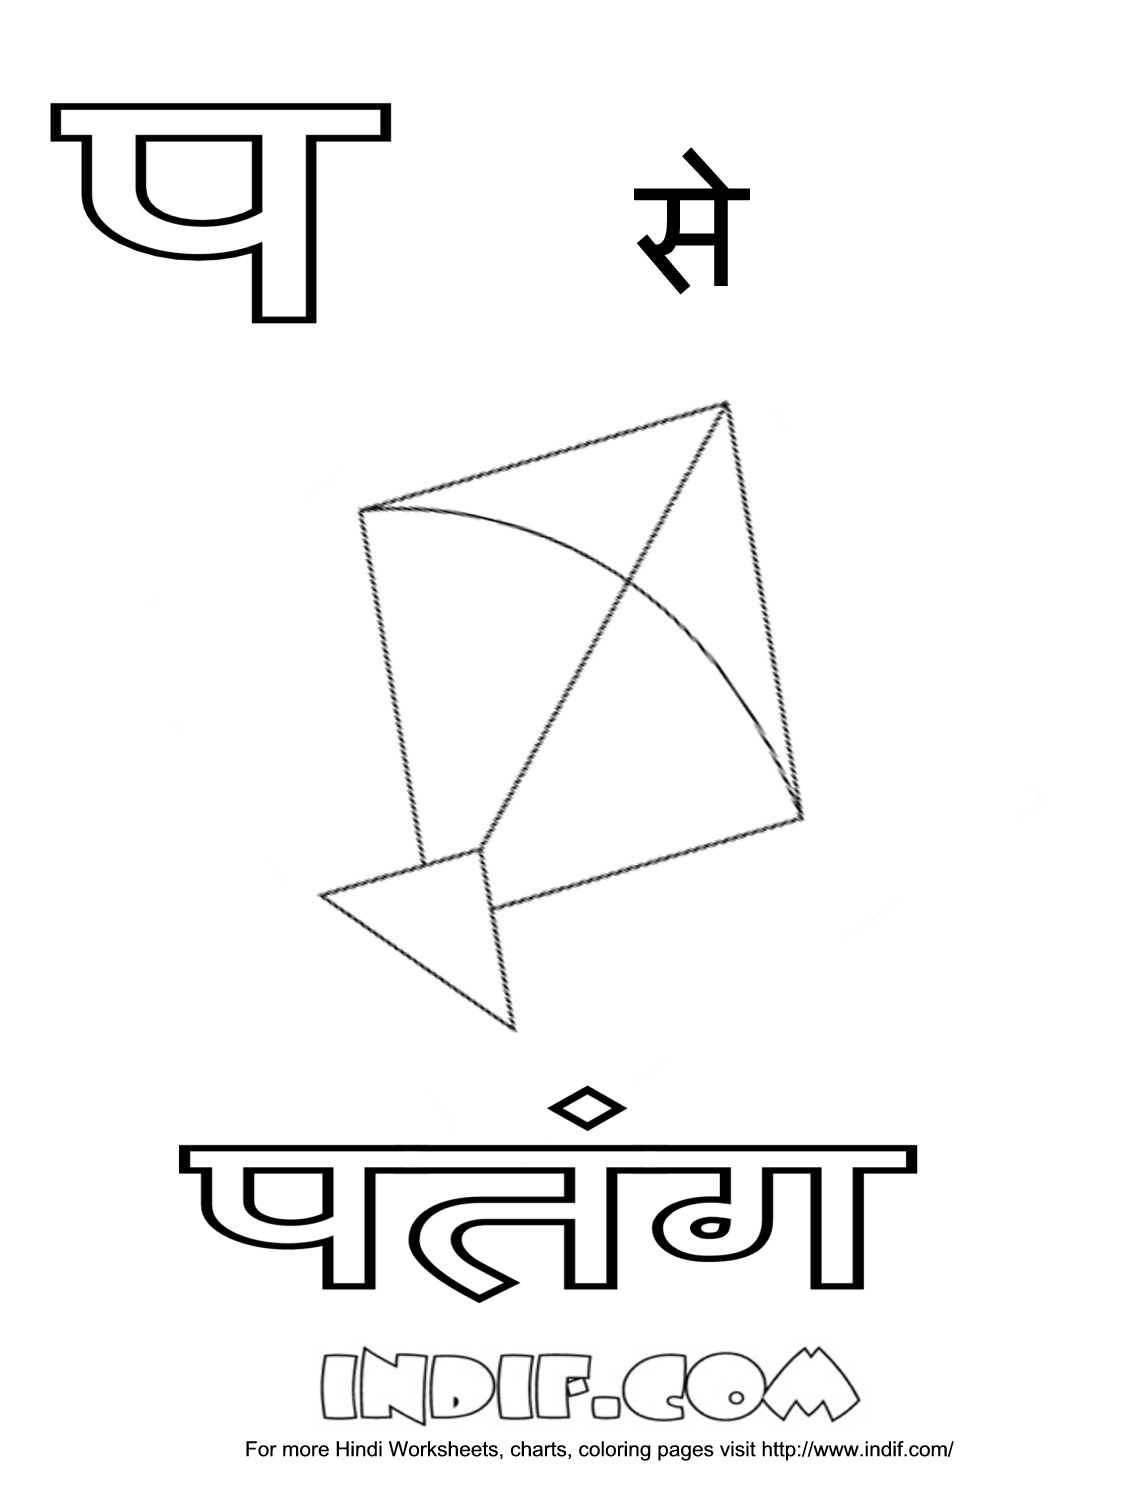 hindi alphabets coloring sheets and pages